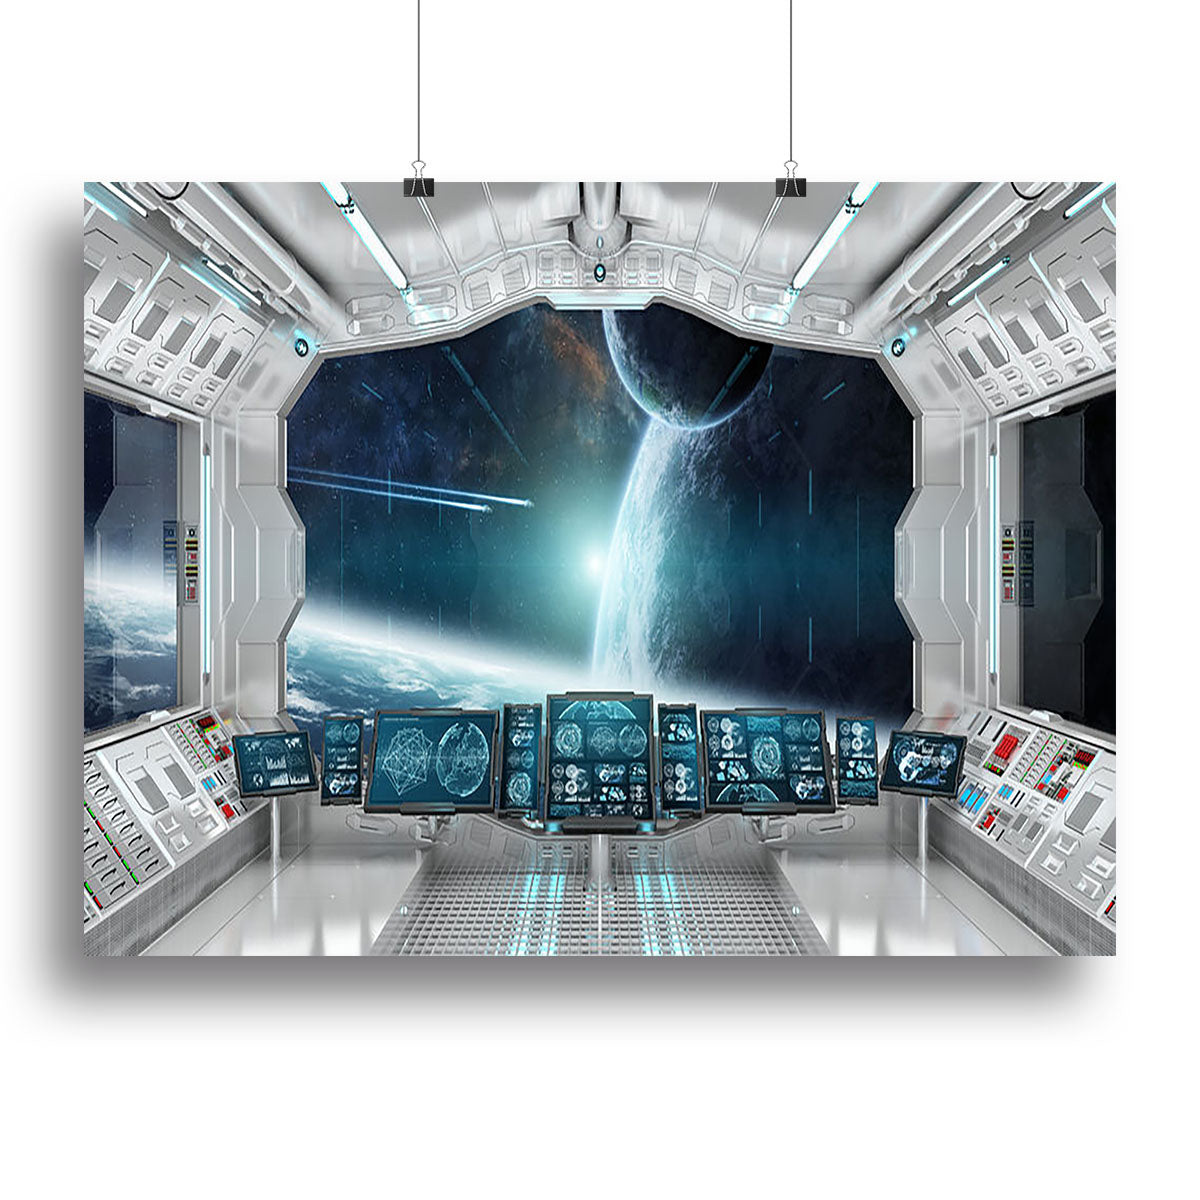 Spaceship Control Center Canvas Print or Poster - Canvas Art Rocks - 2